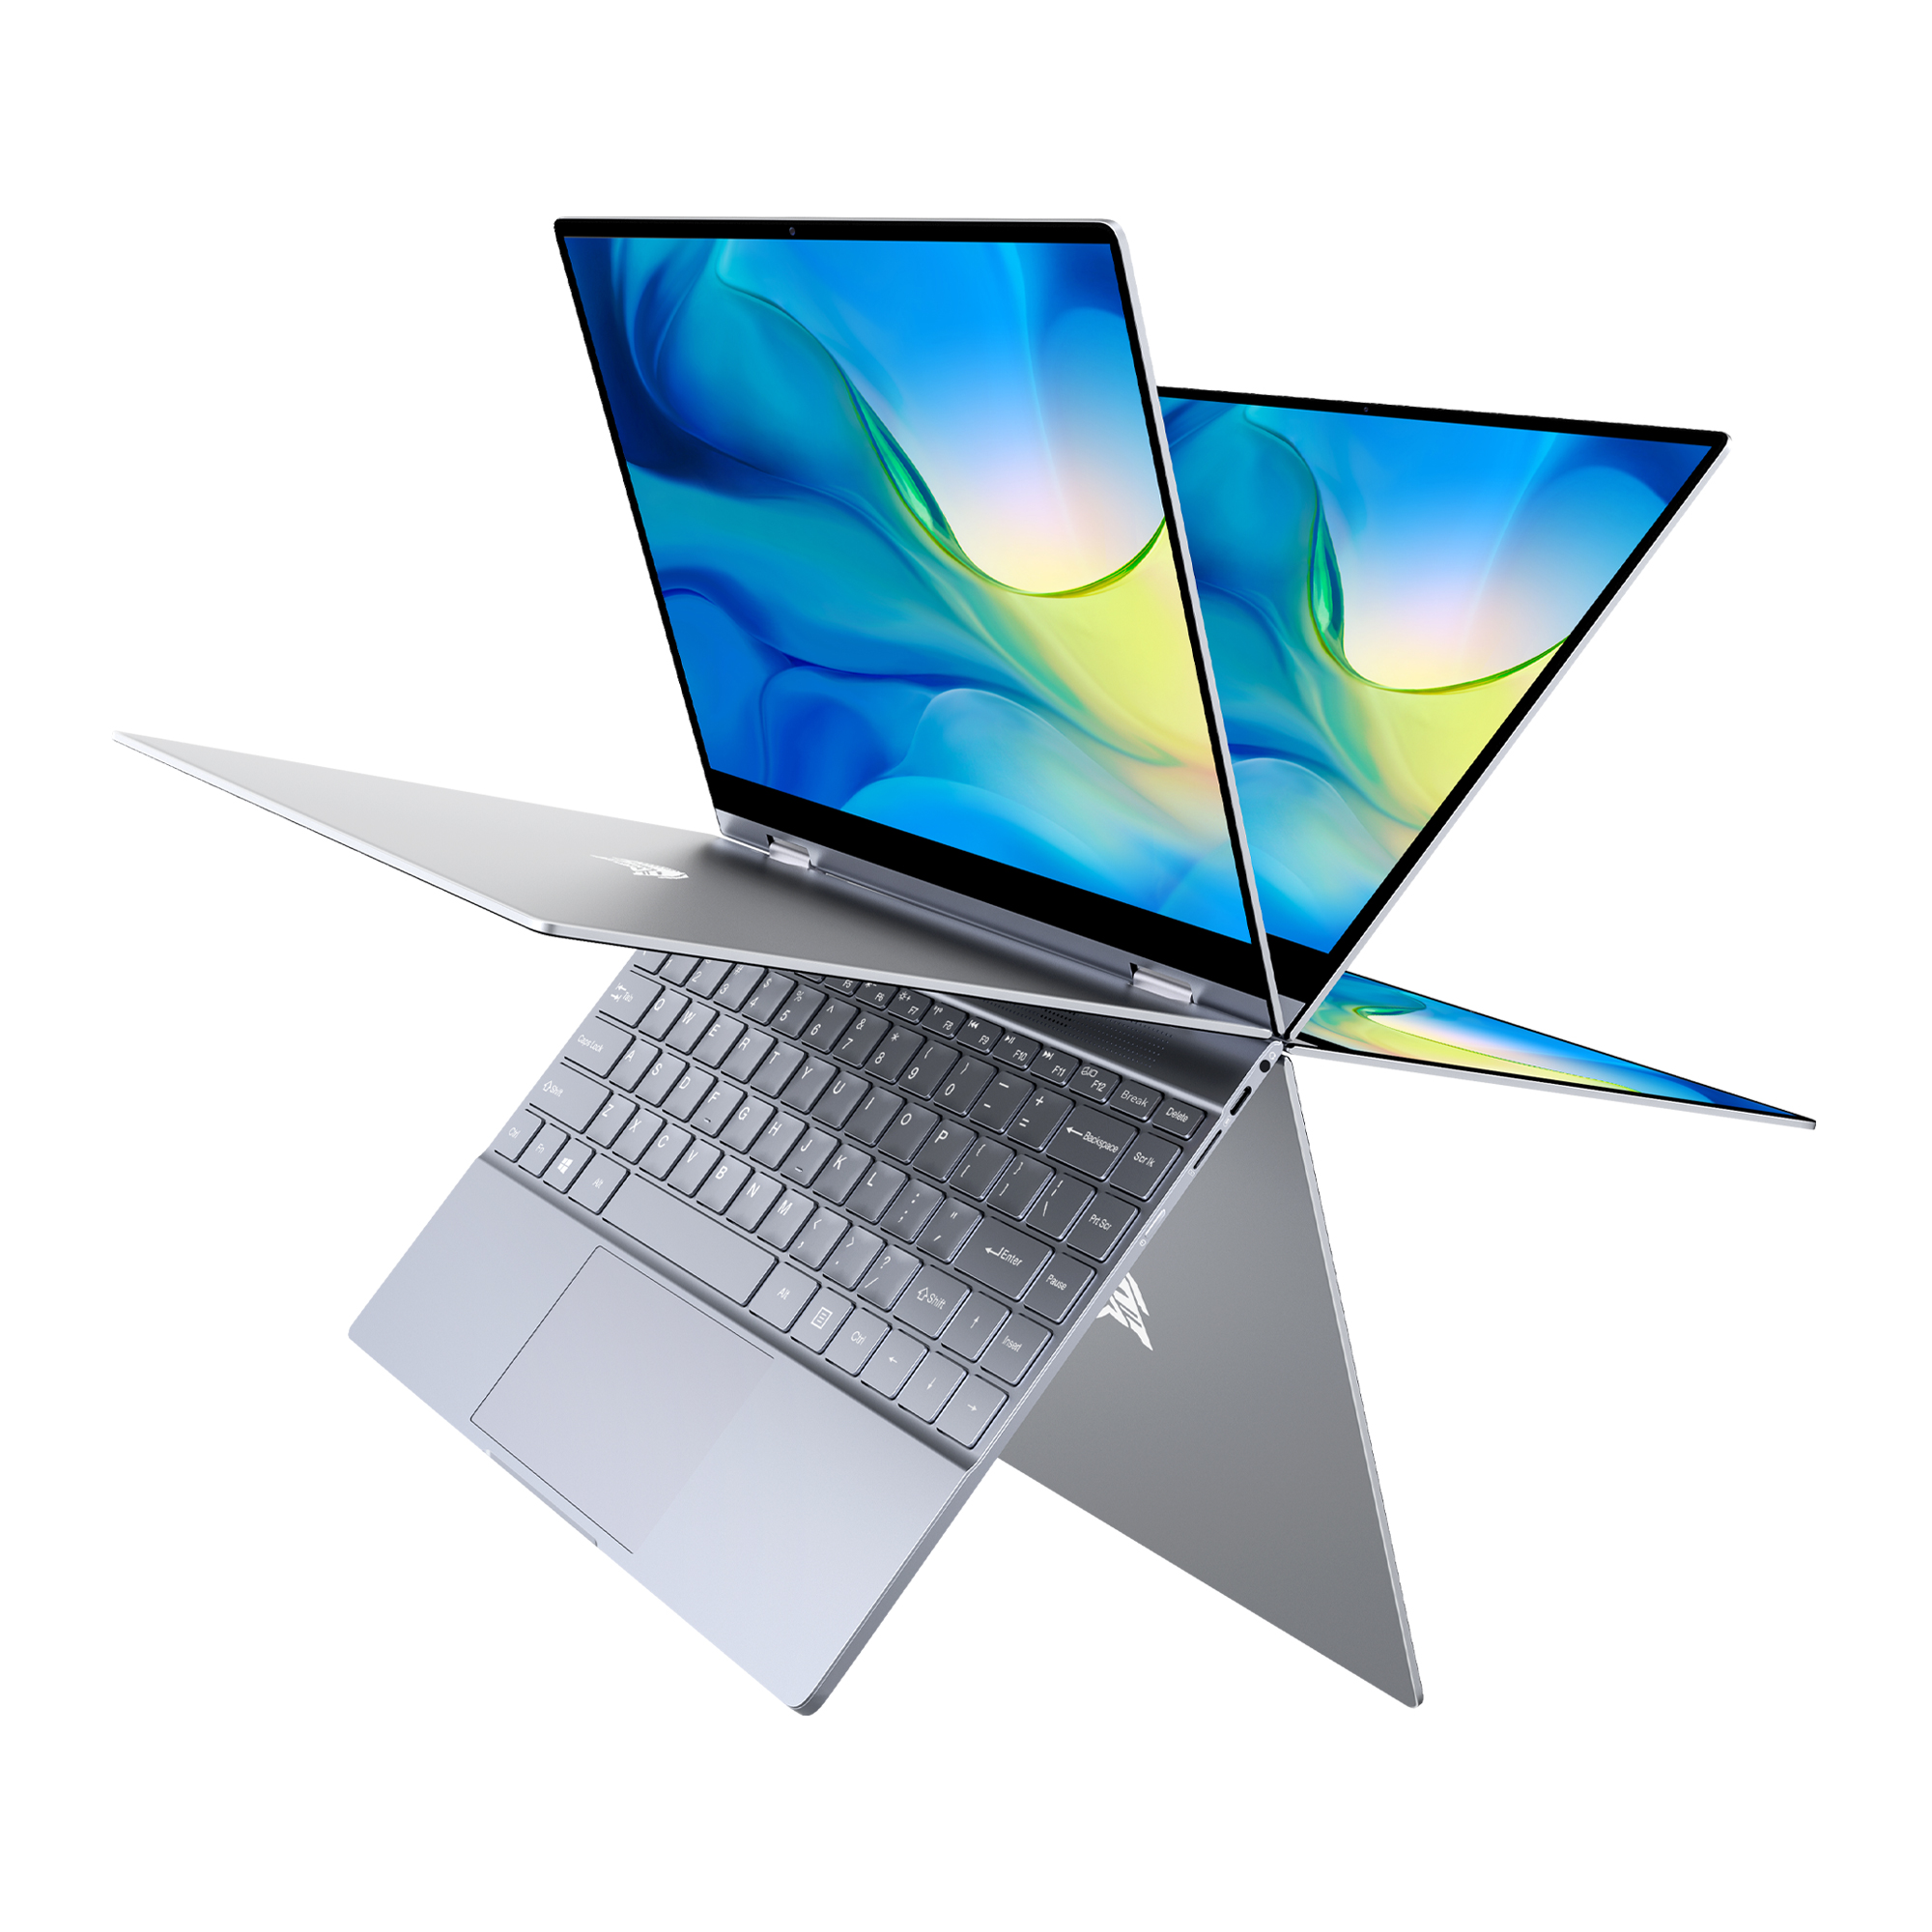 BMAX Y13 Laptop 13.3 inch 360-degree Touchscreen Intel N4120 8GB 256GB SSD